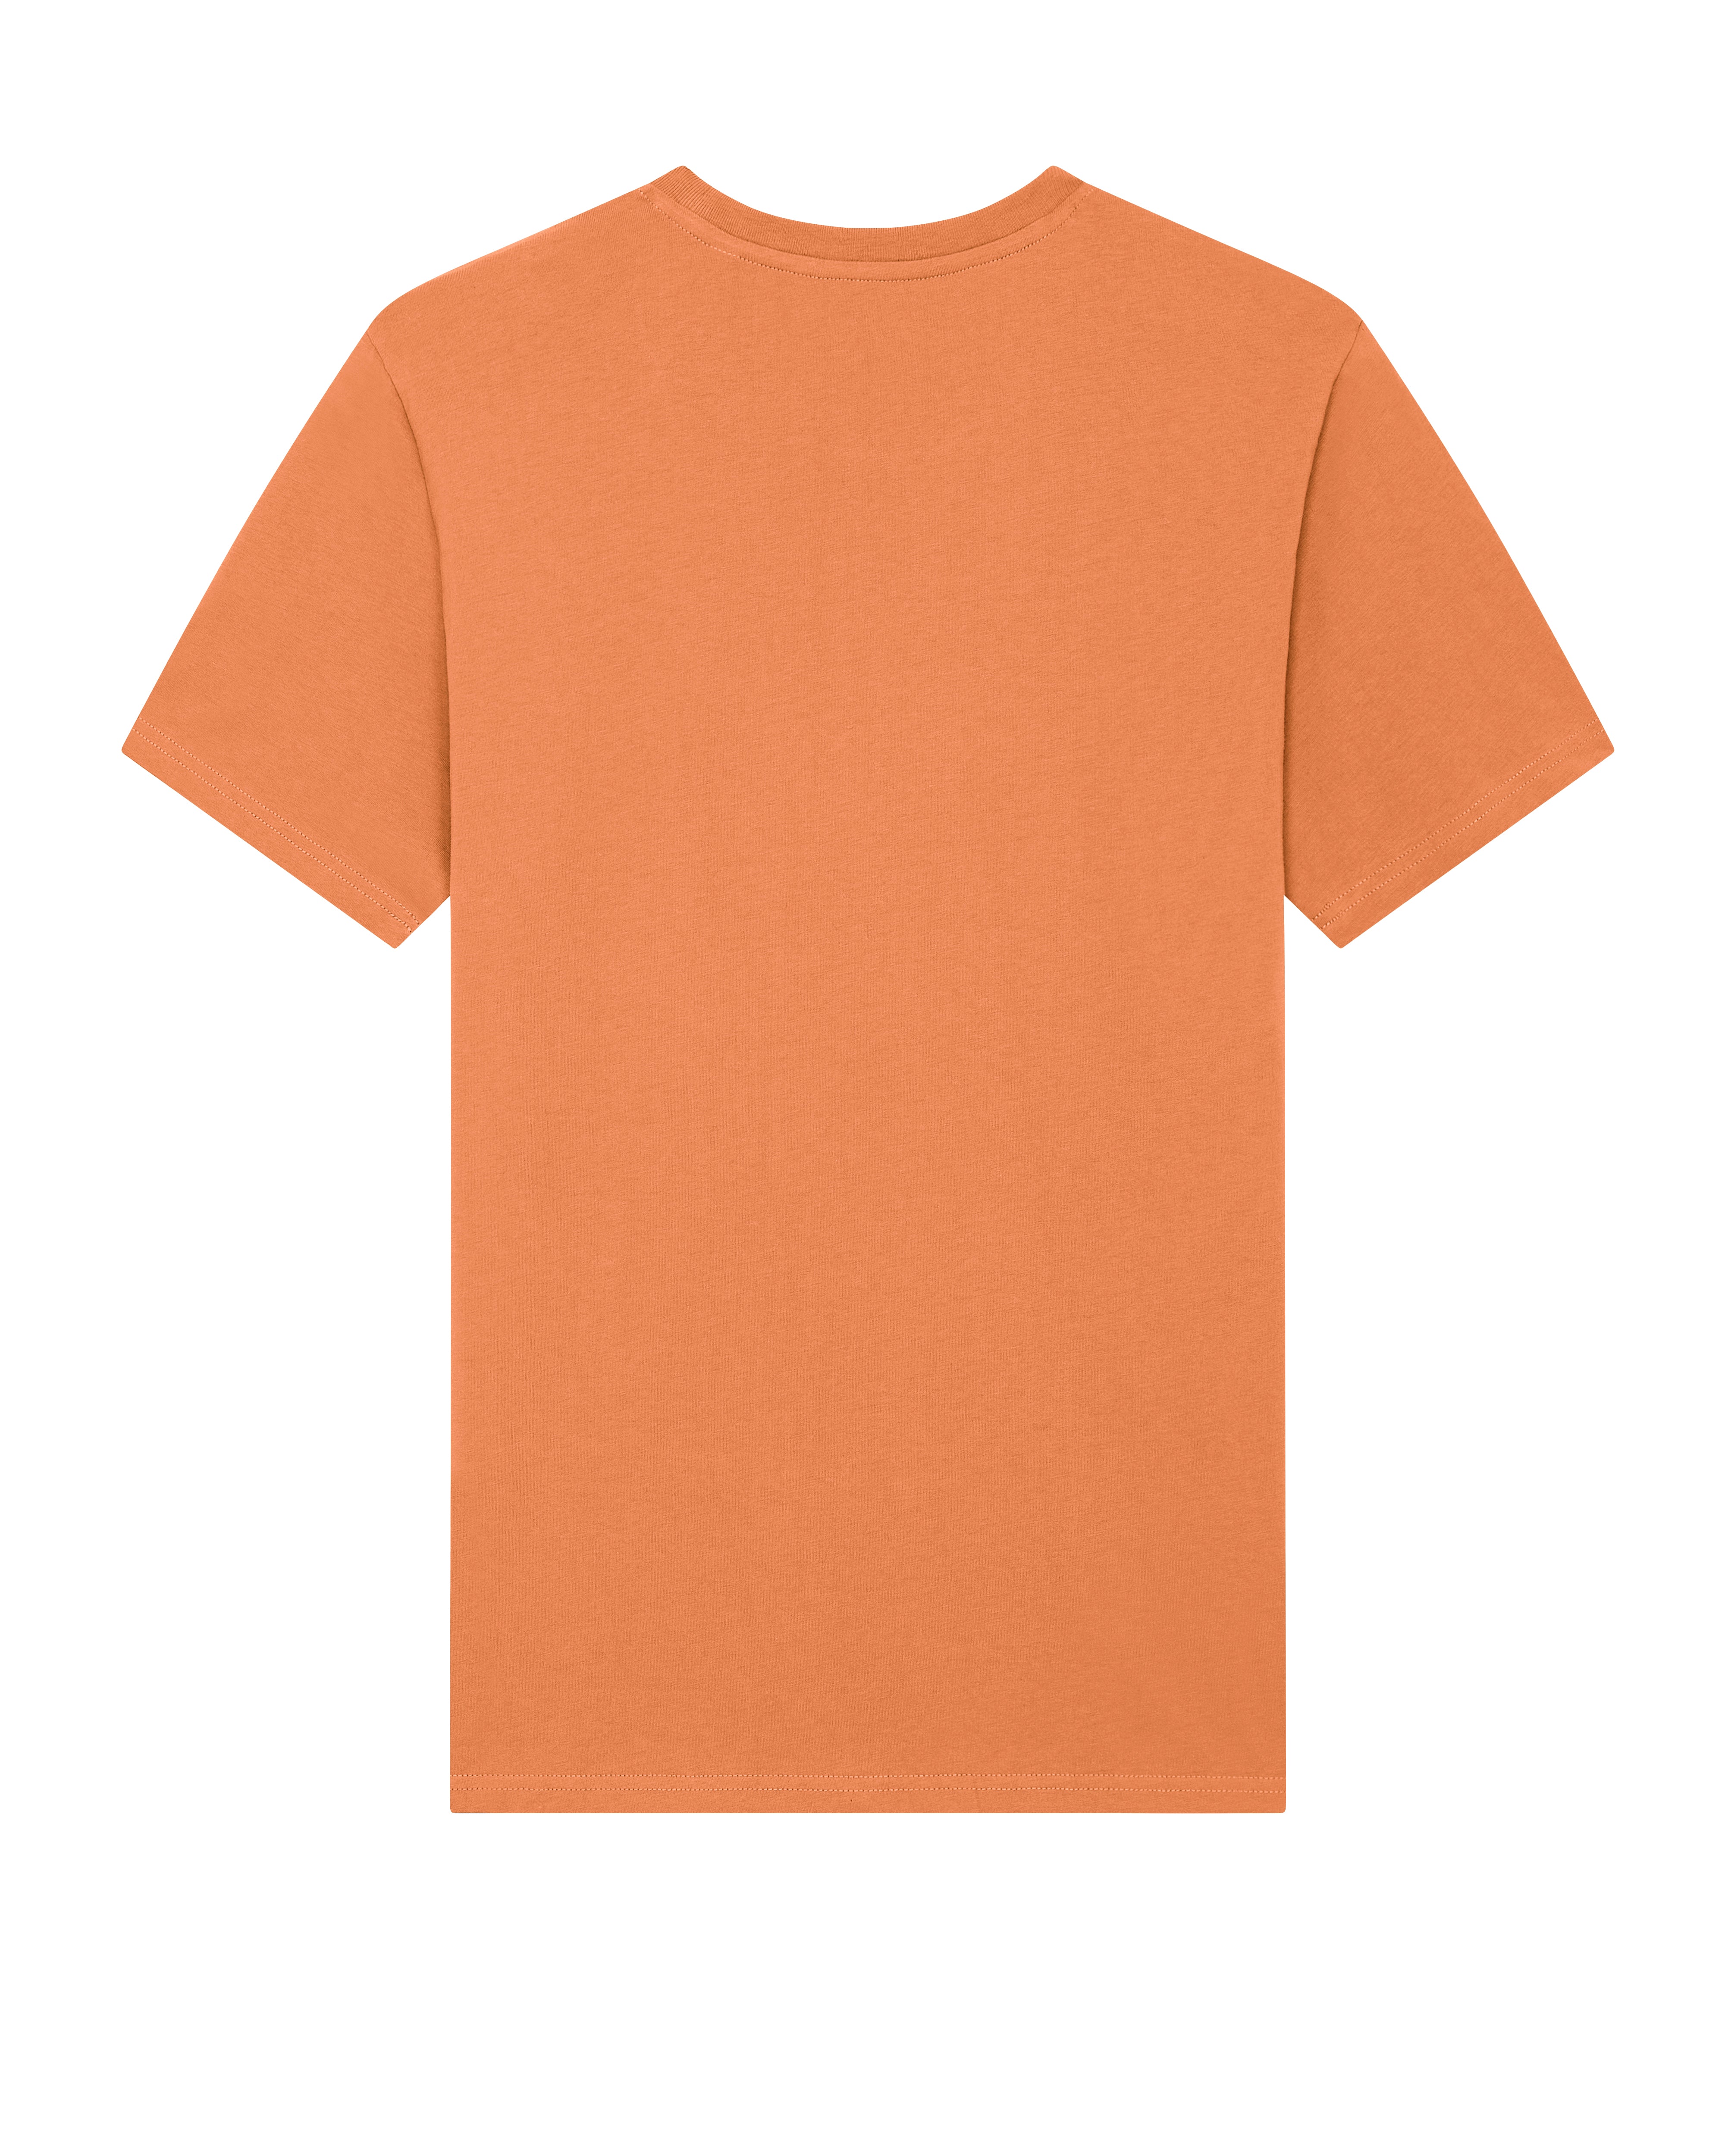 T-shirt Deeptown Family Orange Volcanique